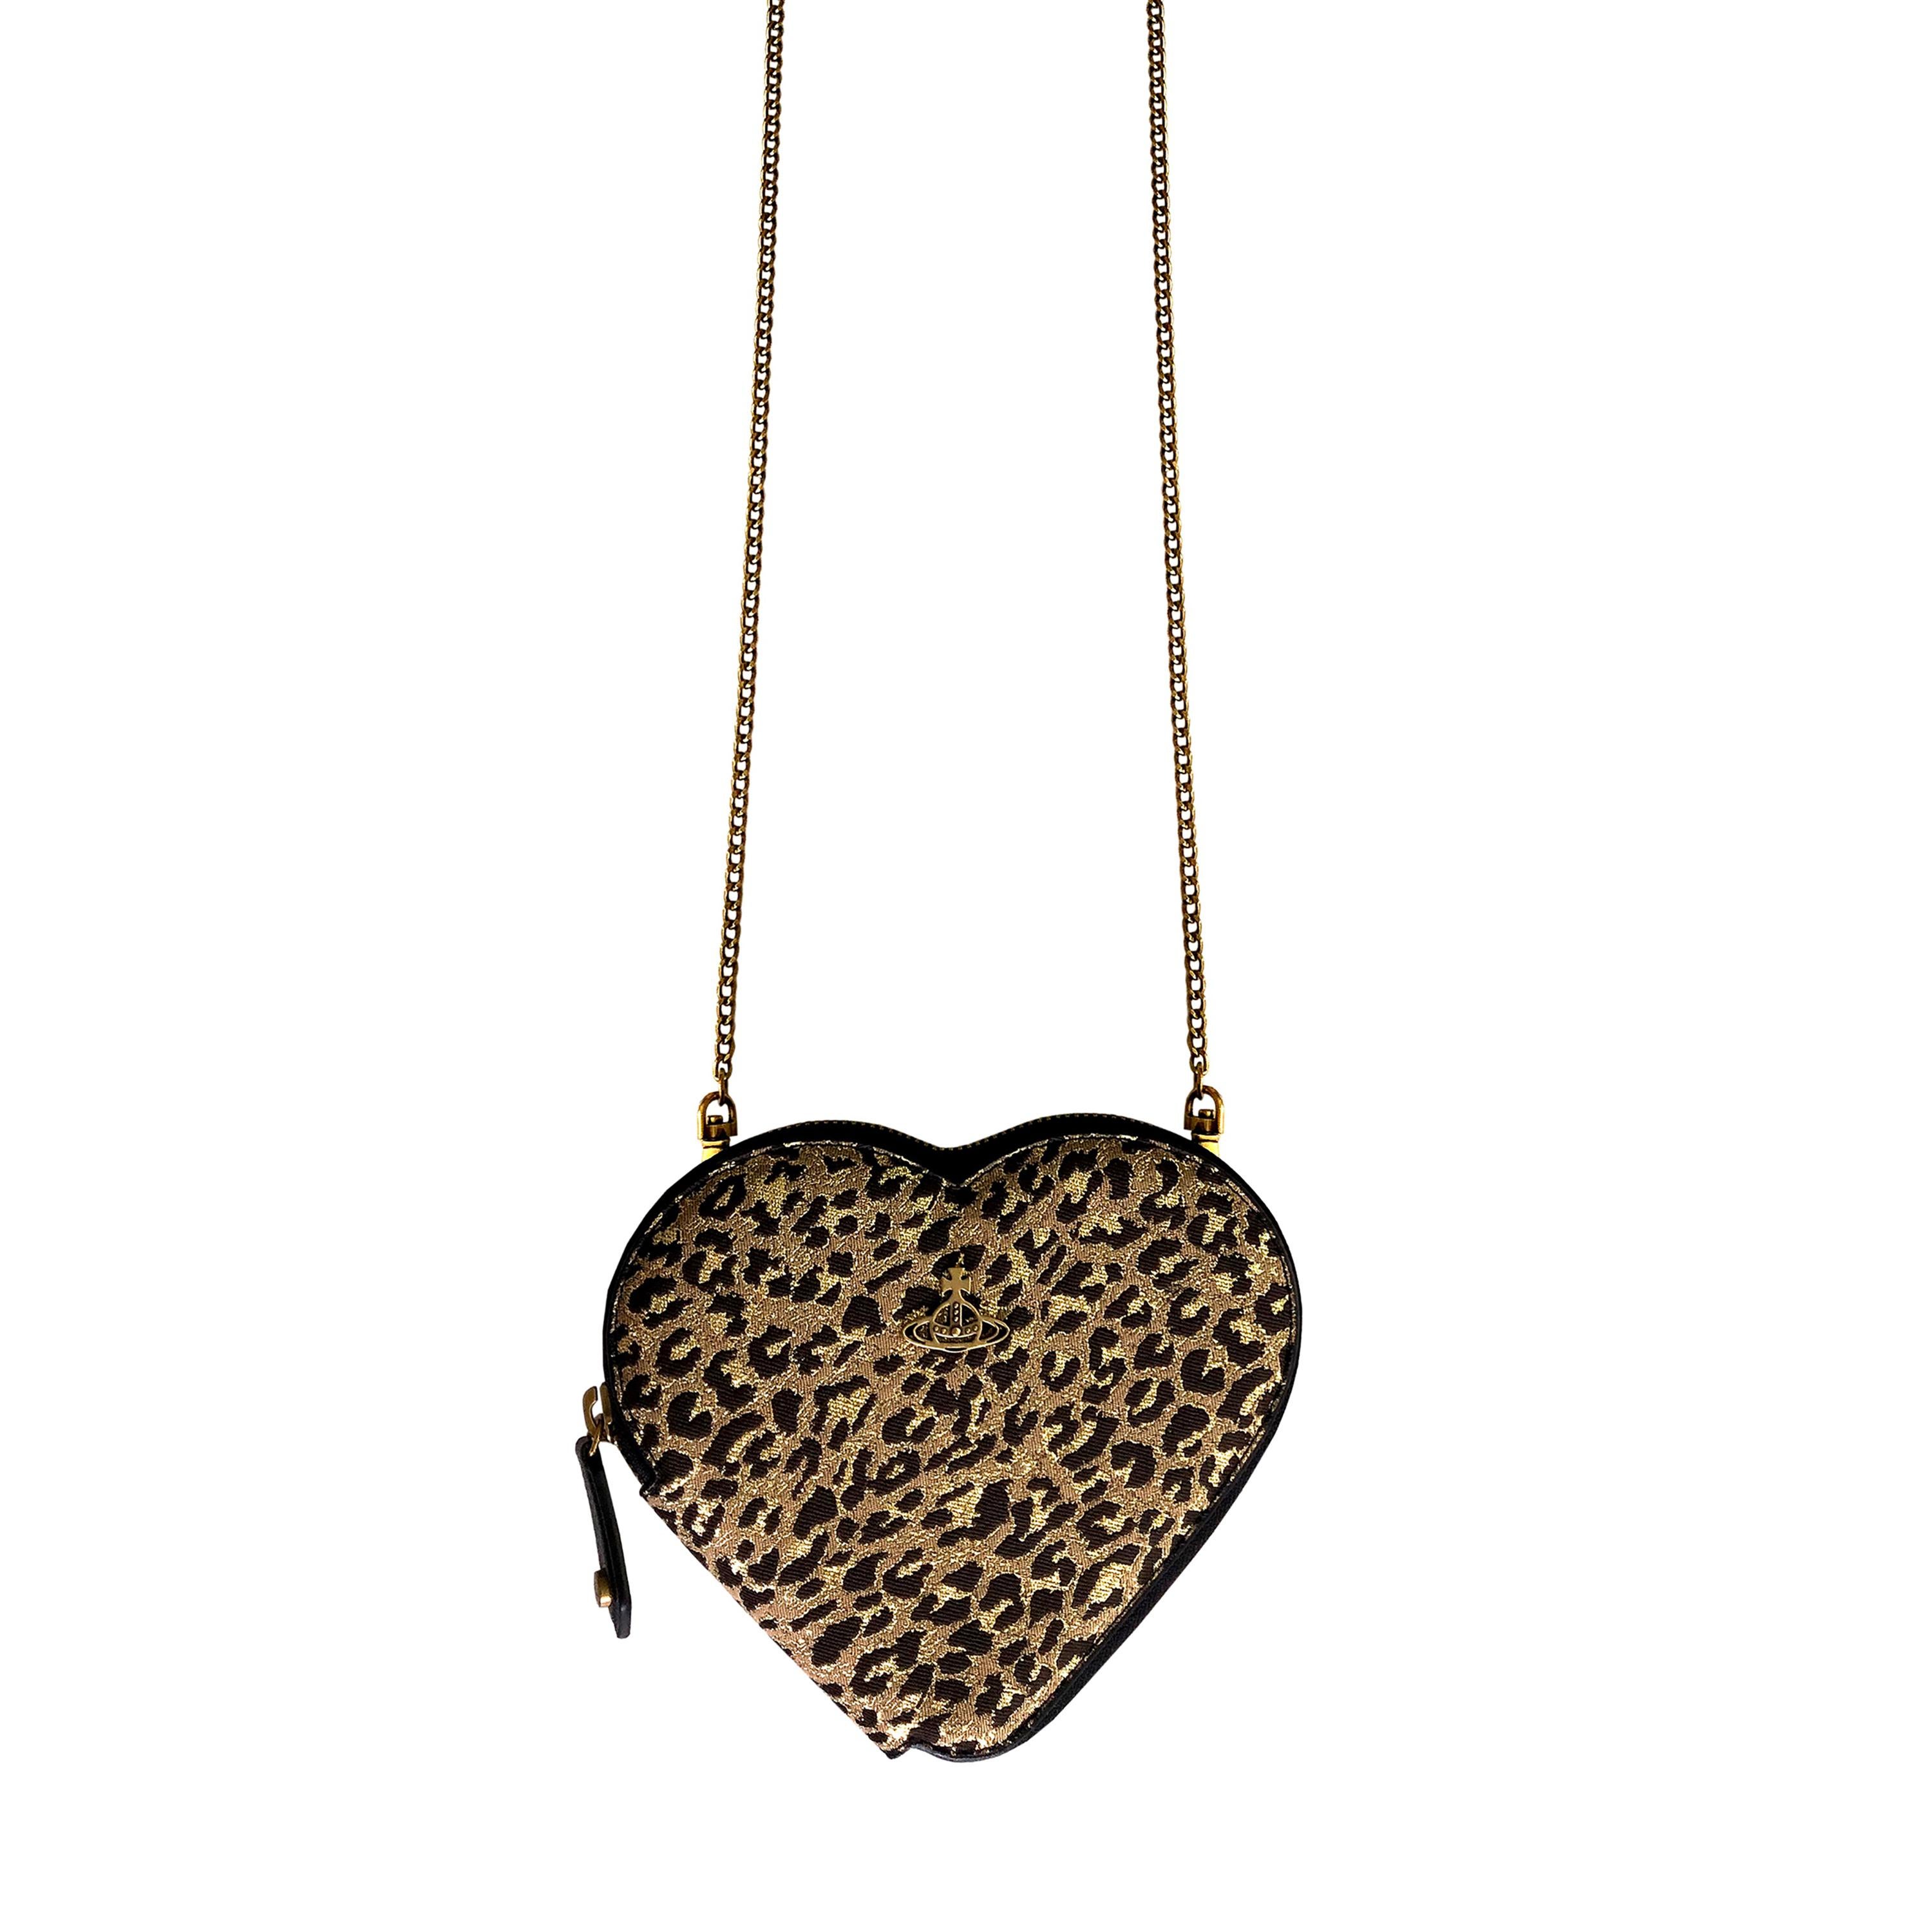 Produkt Details: Vivienne Westwood - Gold Leopard Jacquard Heart Crossbody Bag - Verstellbarer / Abnehmbarer Messingriemen - Vegan - NEW With Tags - Geräumige Innenausstattung - Satin 'Orb' Print Innenfutter - Geätzte 'Orb' Messing + Leder Außen